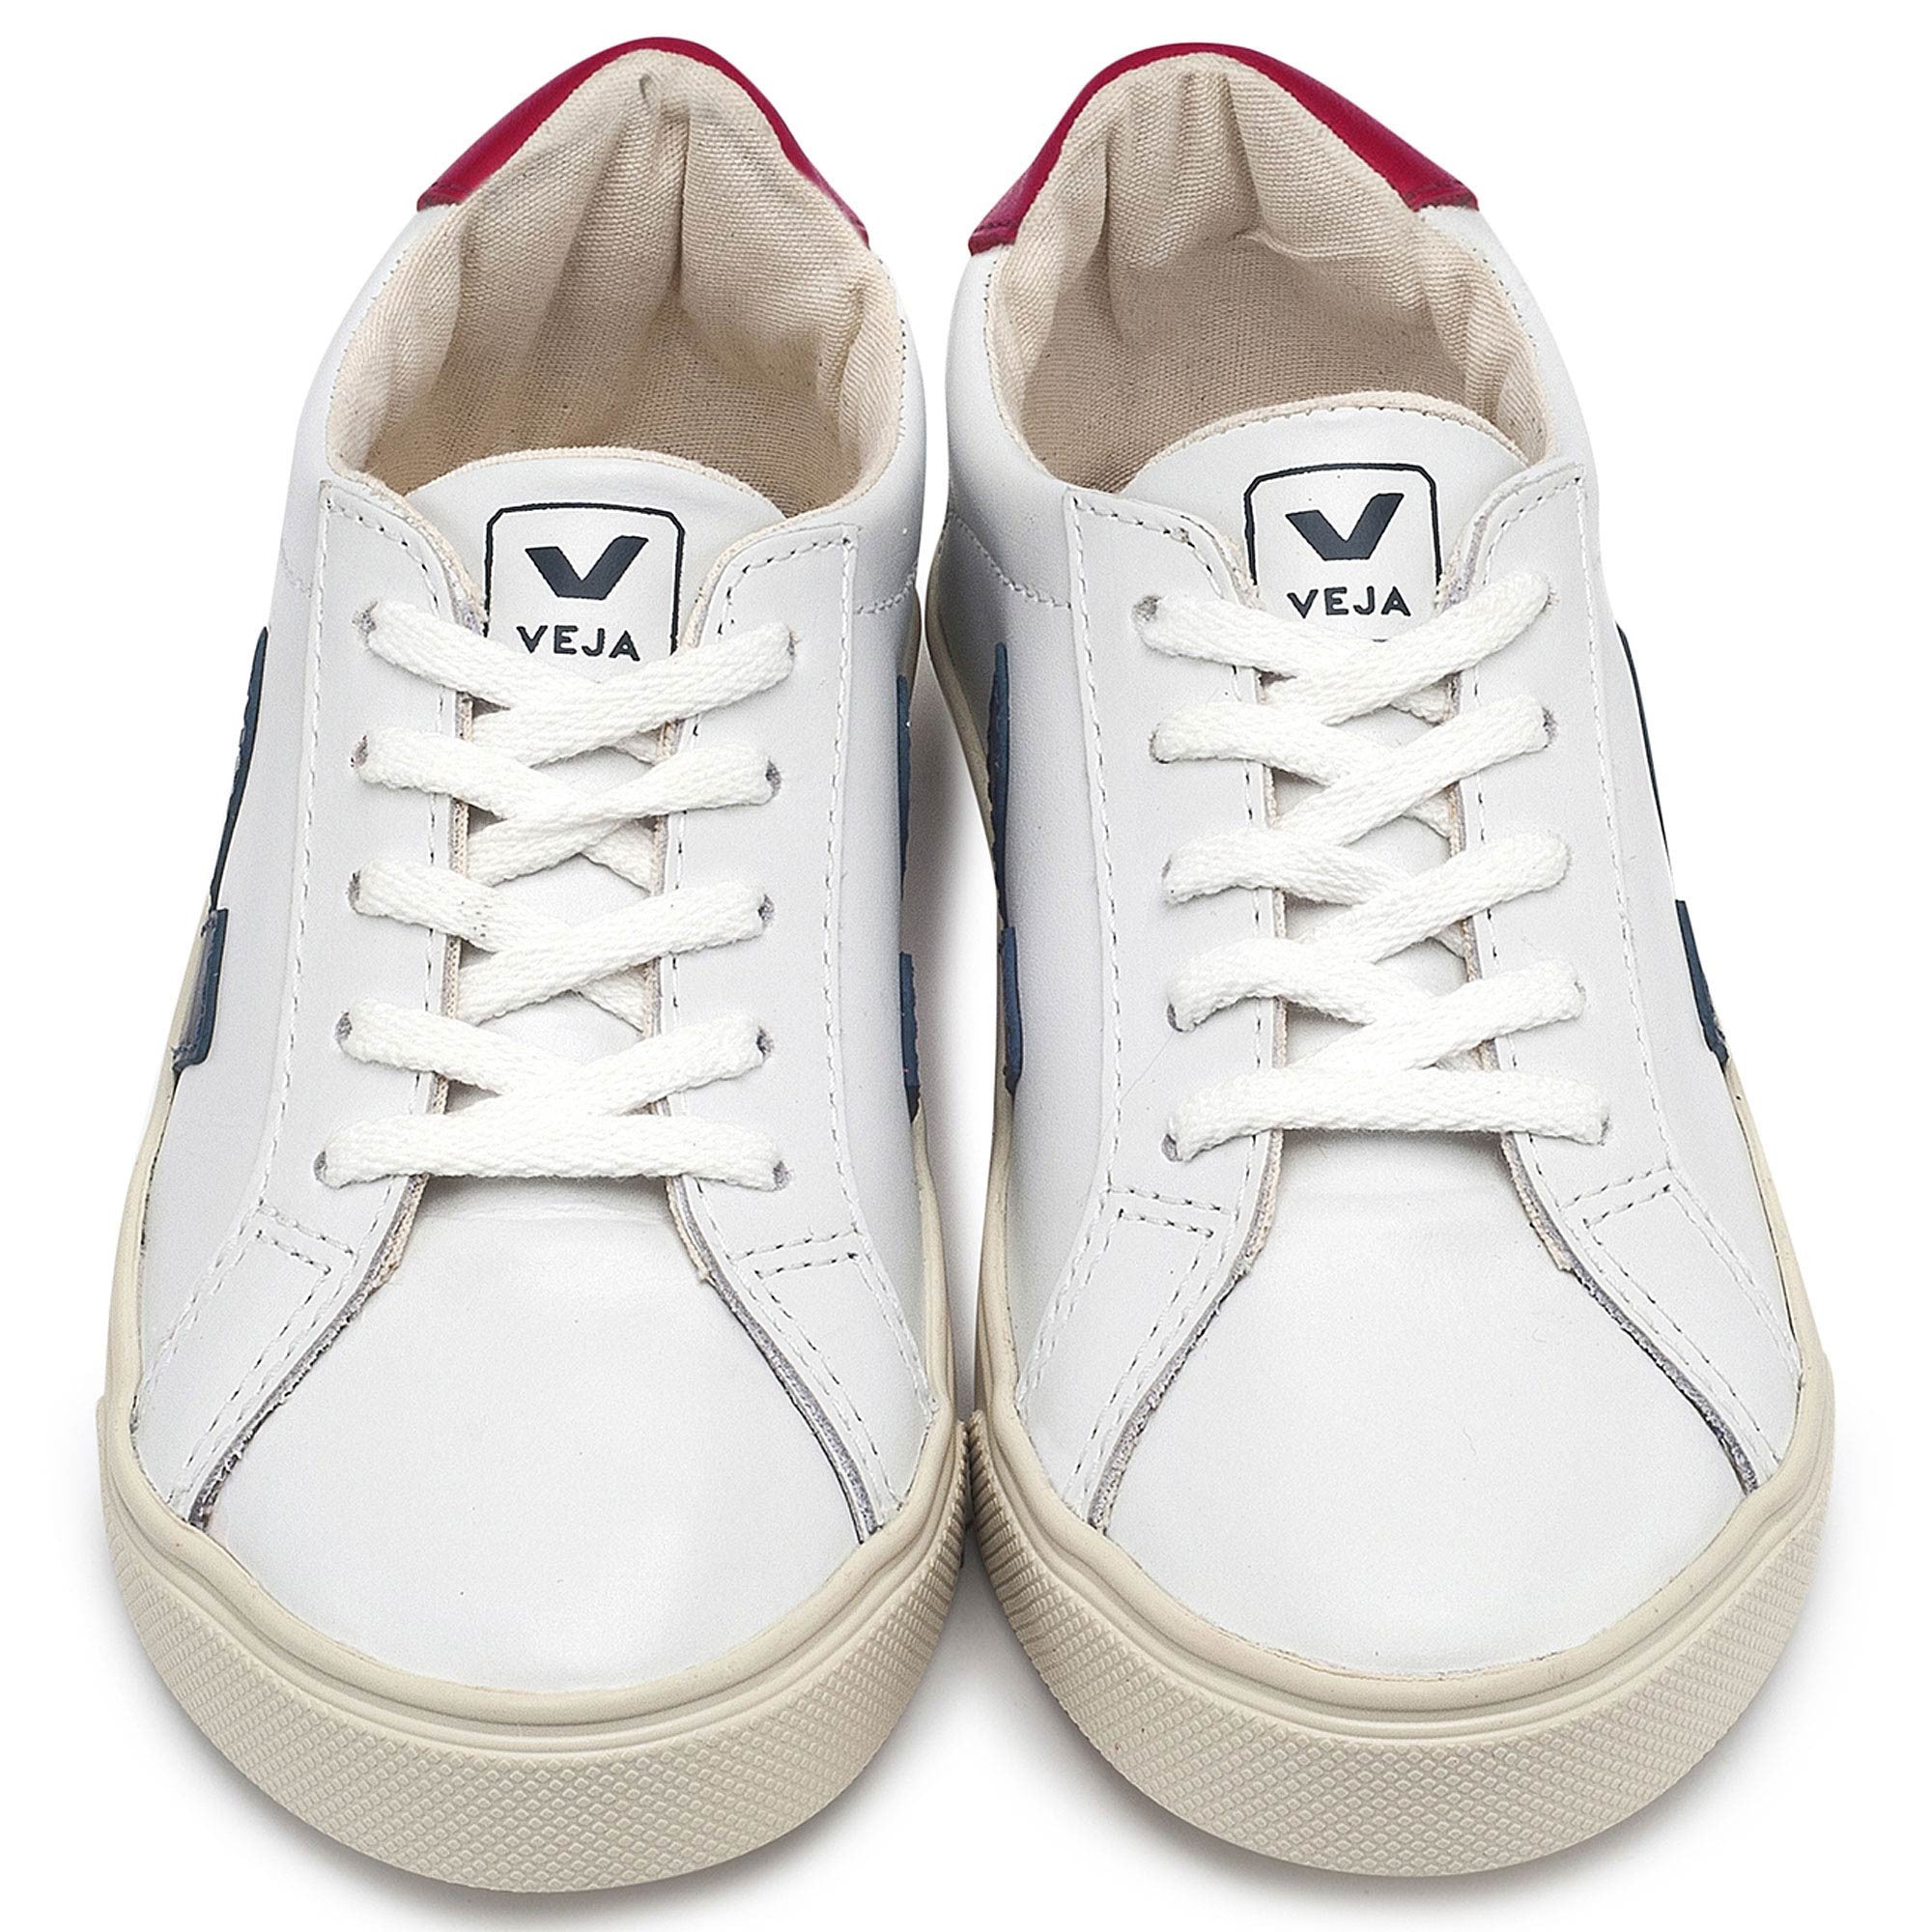 Boys&Girls White Leather Lace shoes - CÉMAROSE | Children's Fashion Store - 1